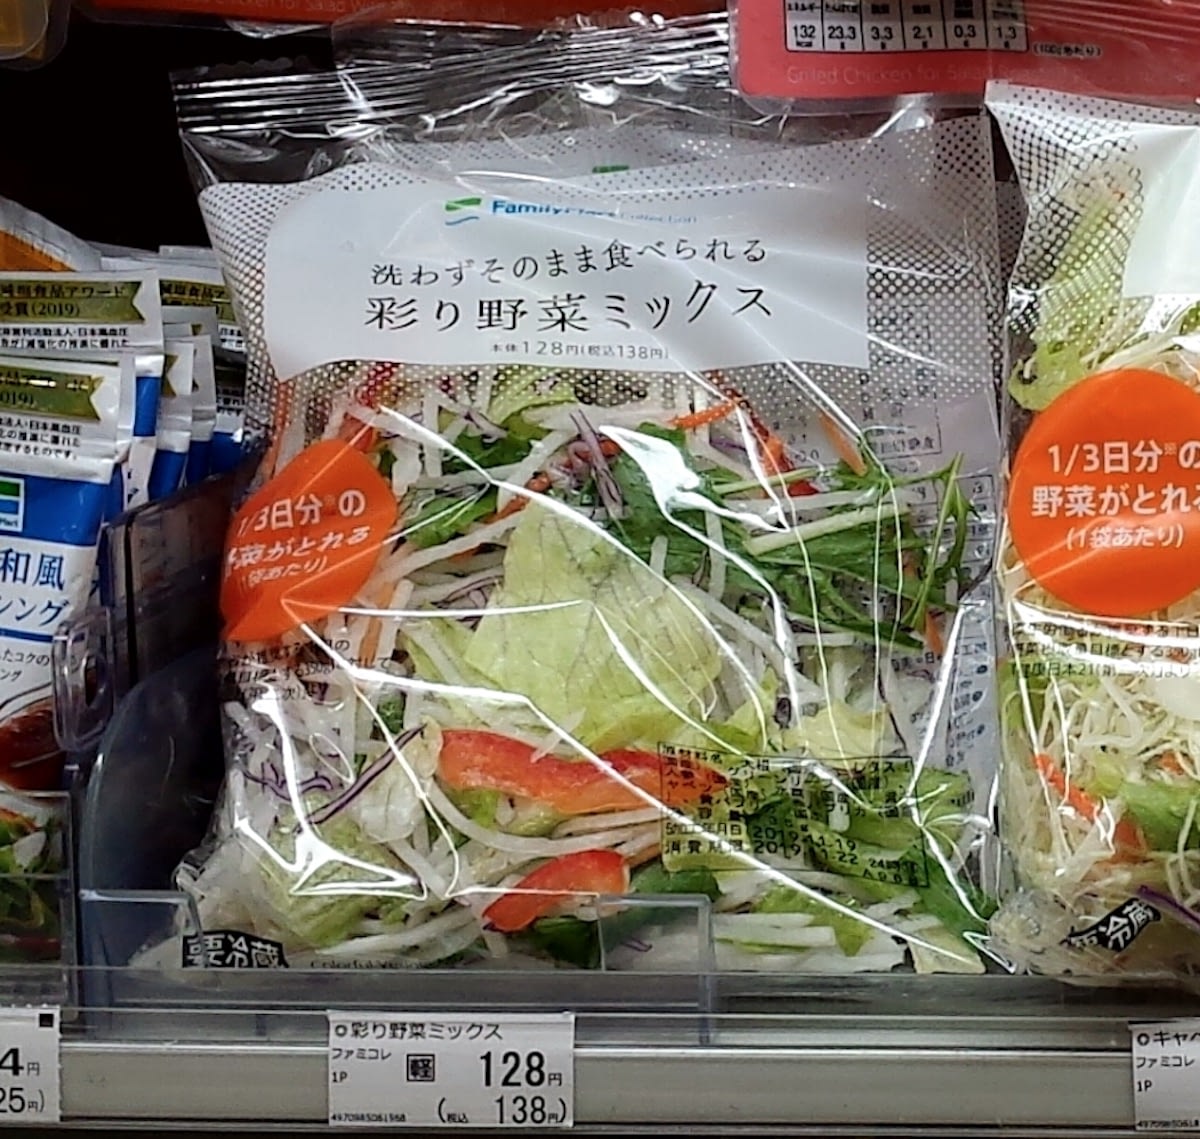 Vegetable Salad No Need To Wash Familymart Vegan In Japan